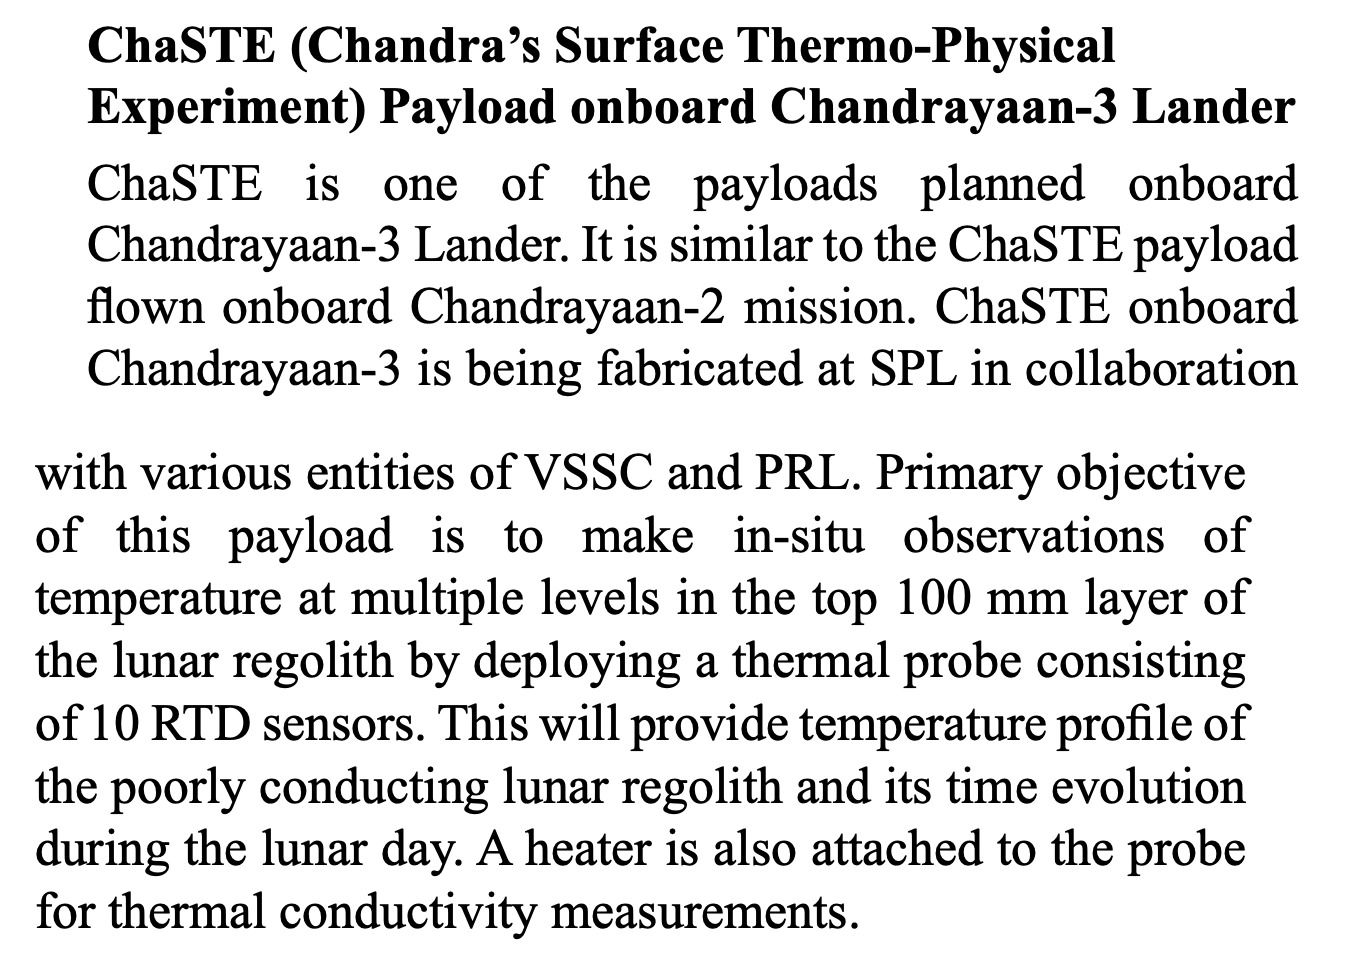 ChaSTE_Chandrayaan_3 (1).jpg